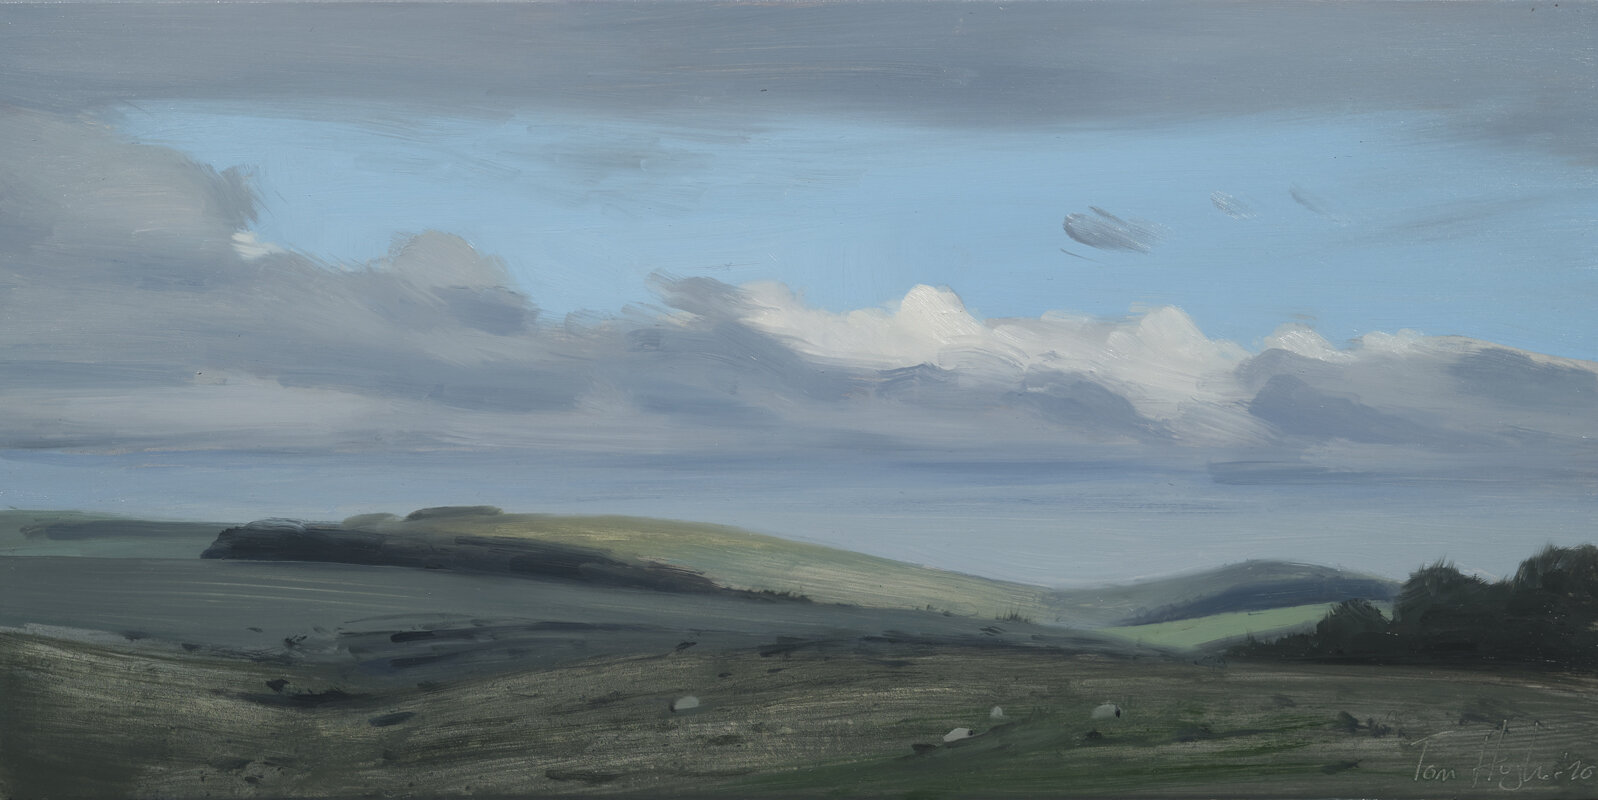 Sheep on the dark moor, sunlit cloud